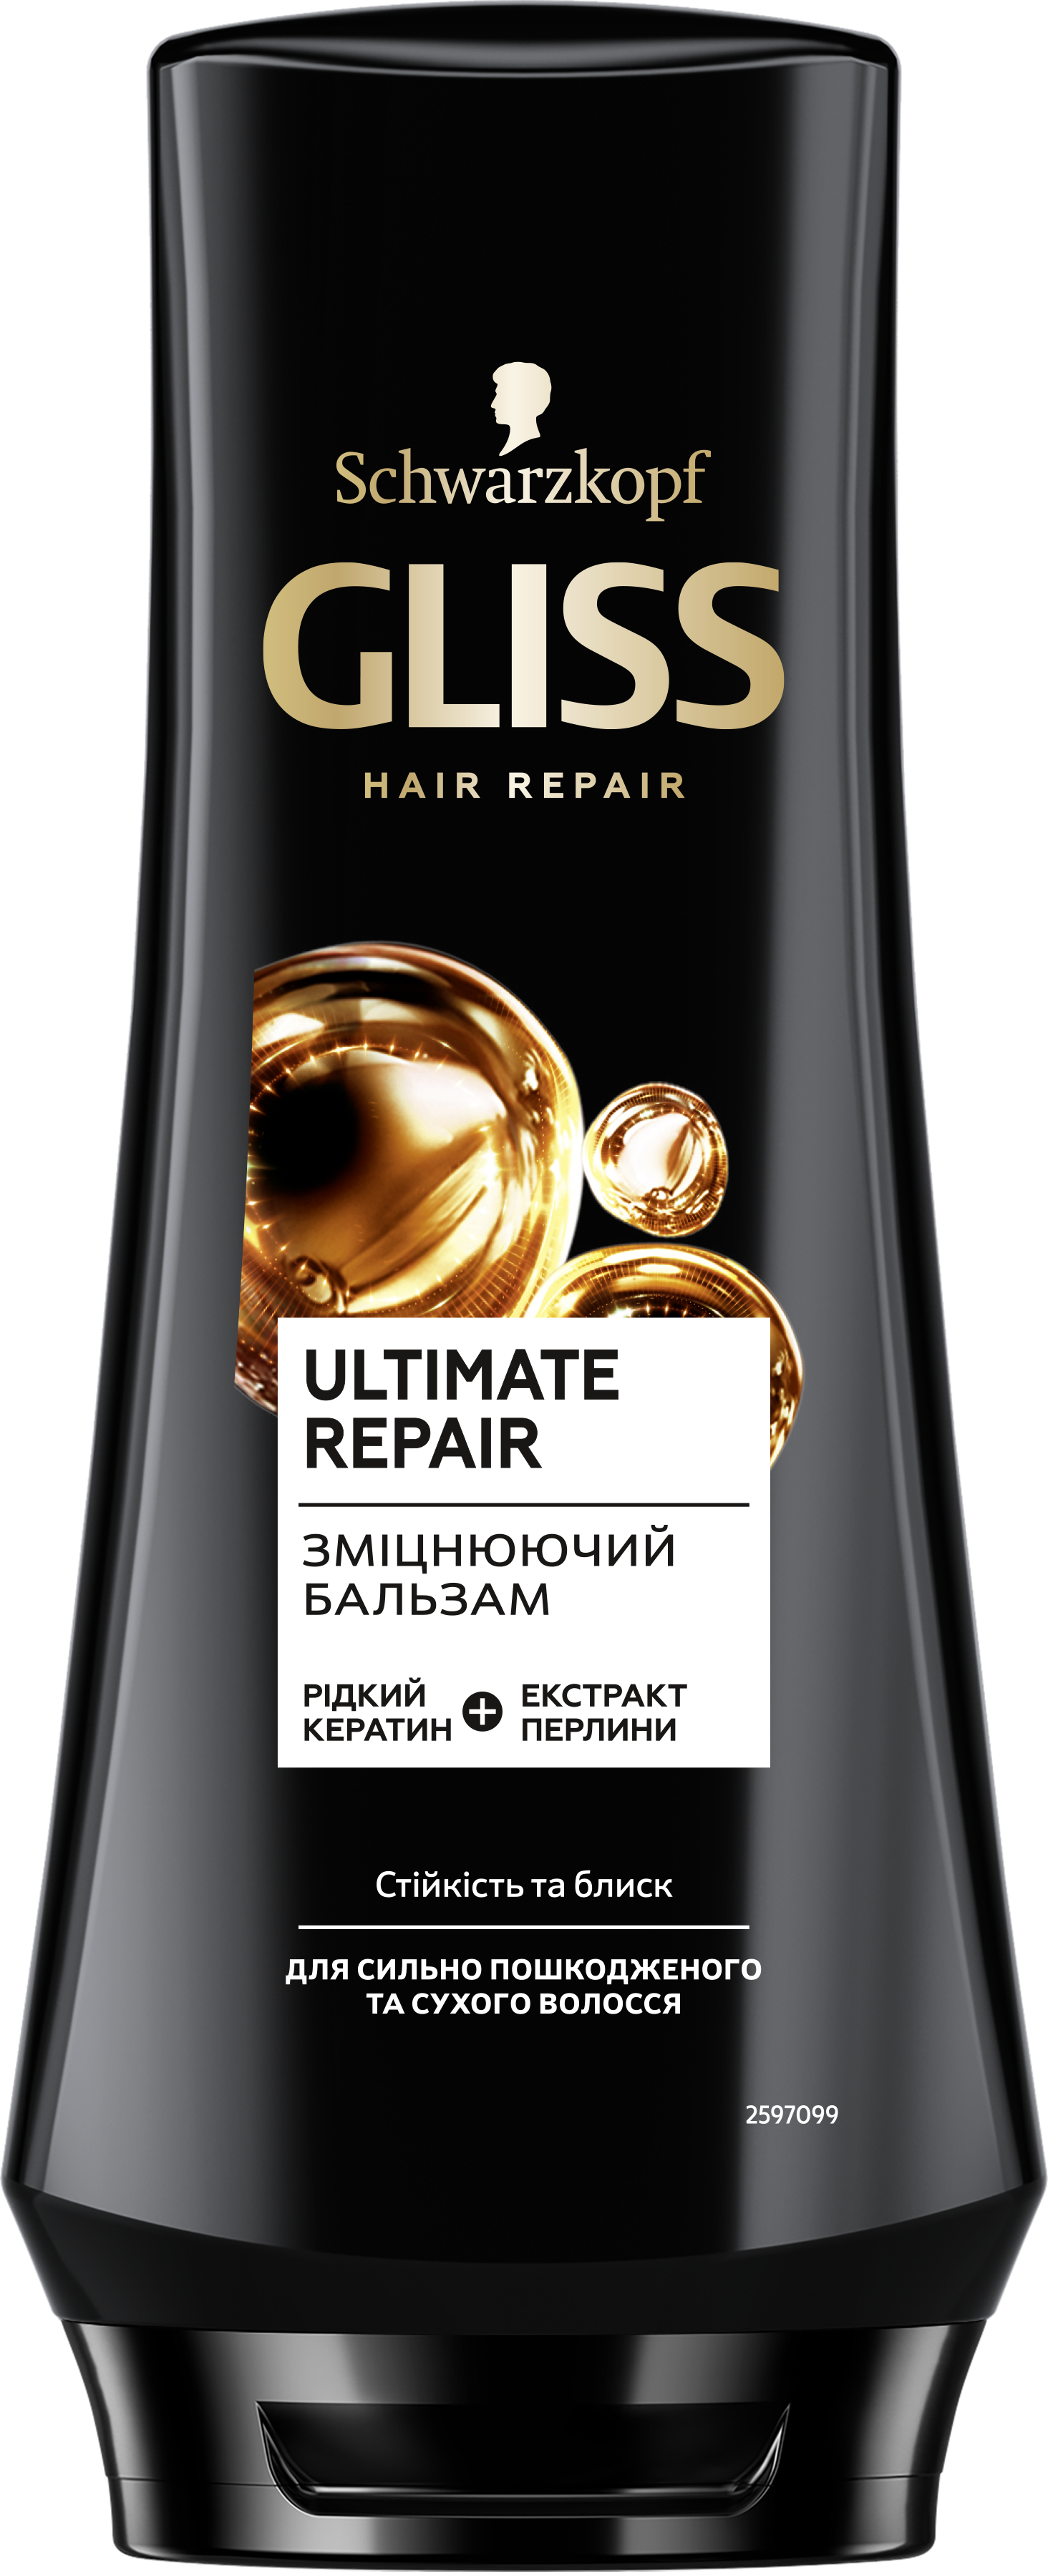 Подарочный набор Gliss Ultimate Repair: Шампунь, 400 мл + Бальзам, 200 мл + Масло для волос, 75 мл - фото 4